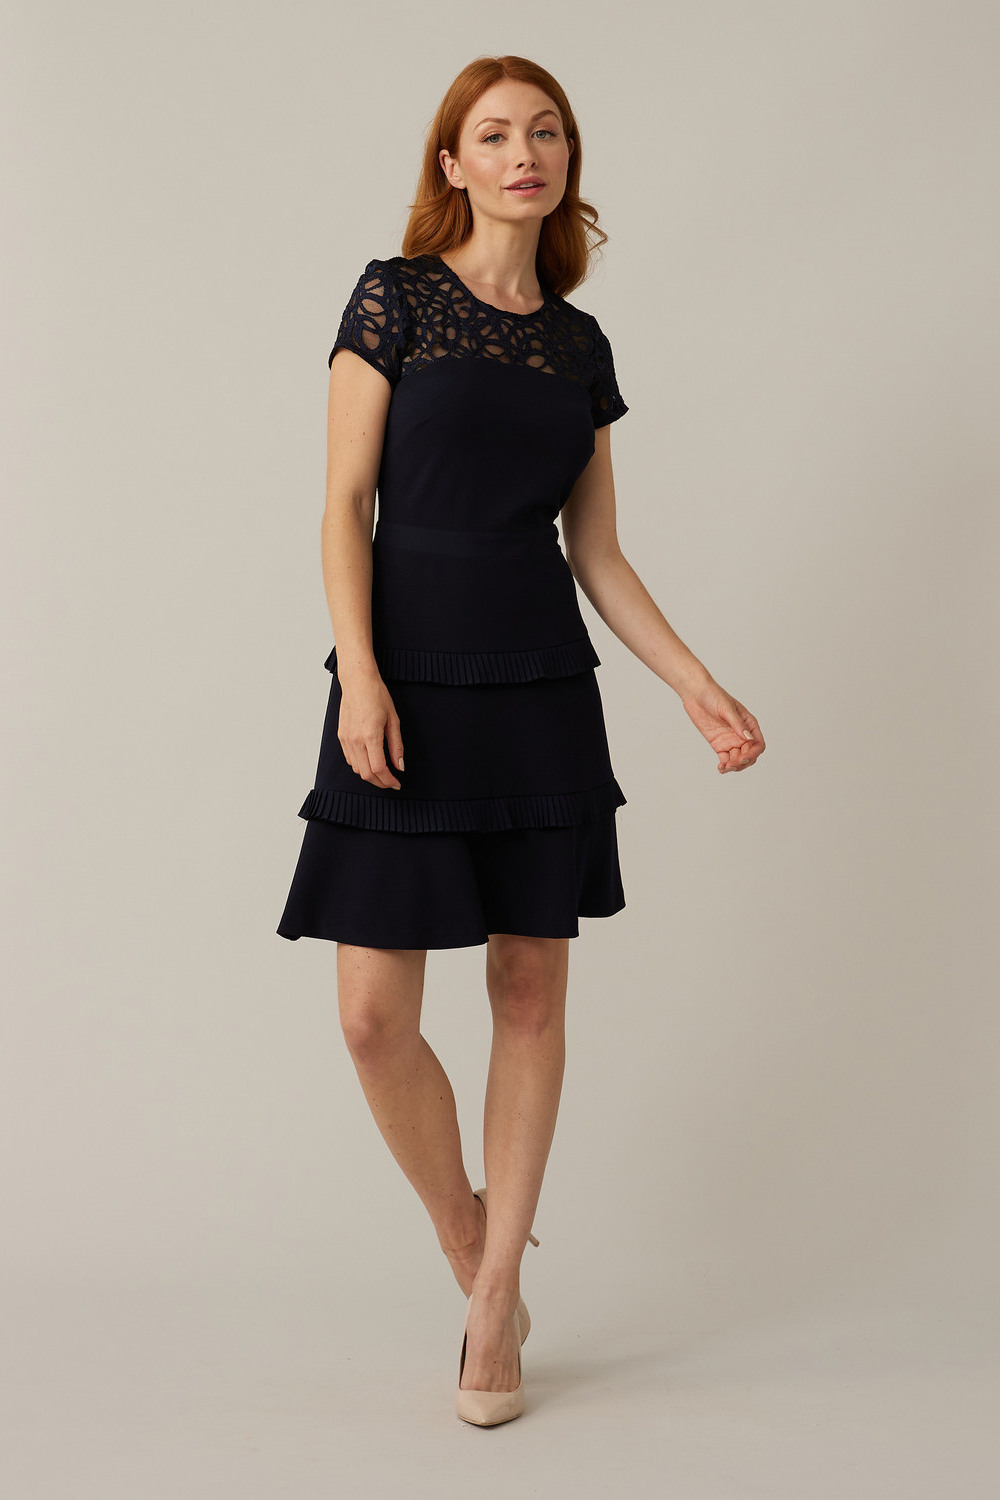 Joseph Ribkoff Lace Neckline Dress Style 221335. Midnight Blue 40